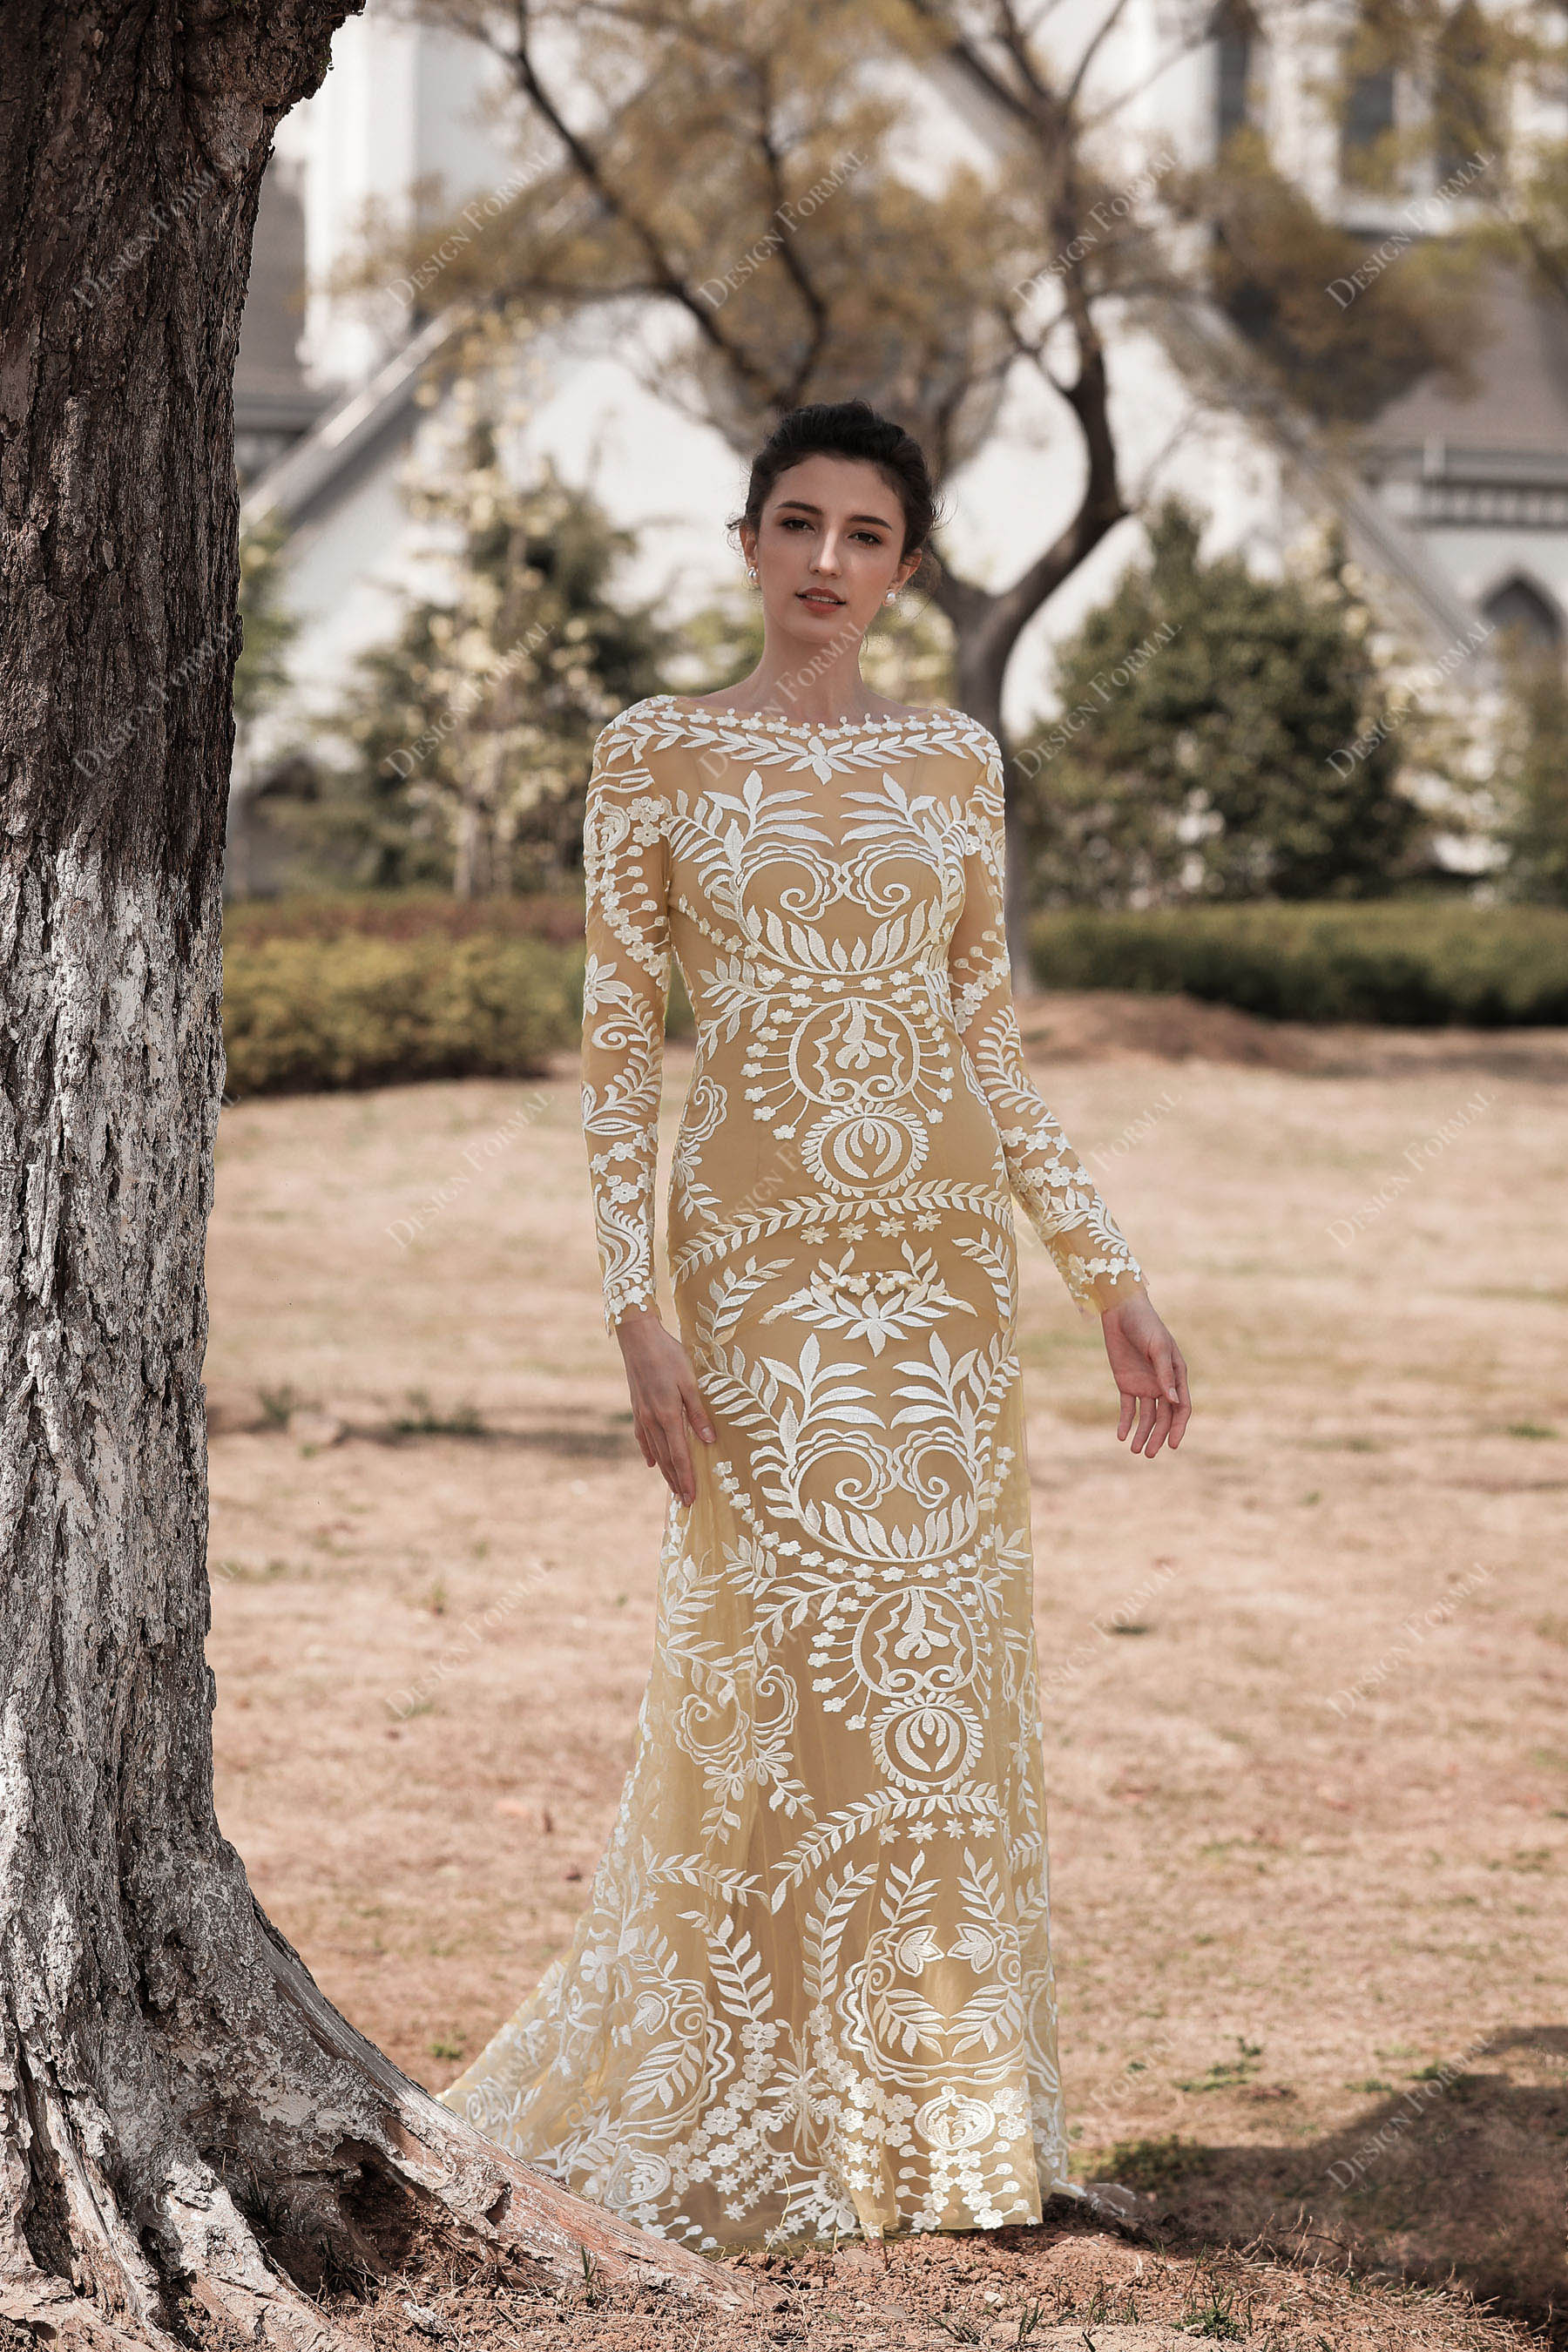 Designer Boho Sleeved Lace Oyster Wedding Dress with Nude Slip